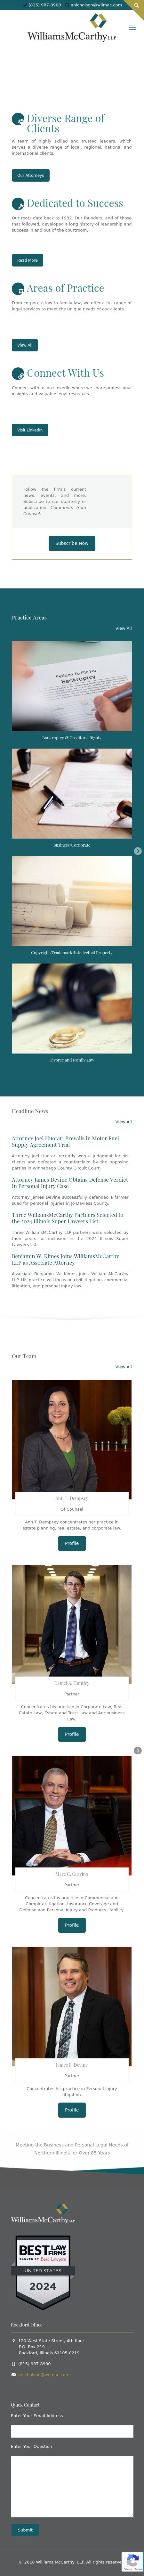 WilliamsMcCarthy LLP - Rockford IL Lawyers